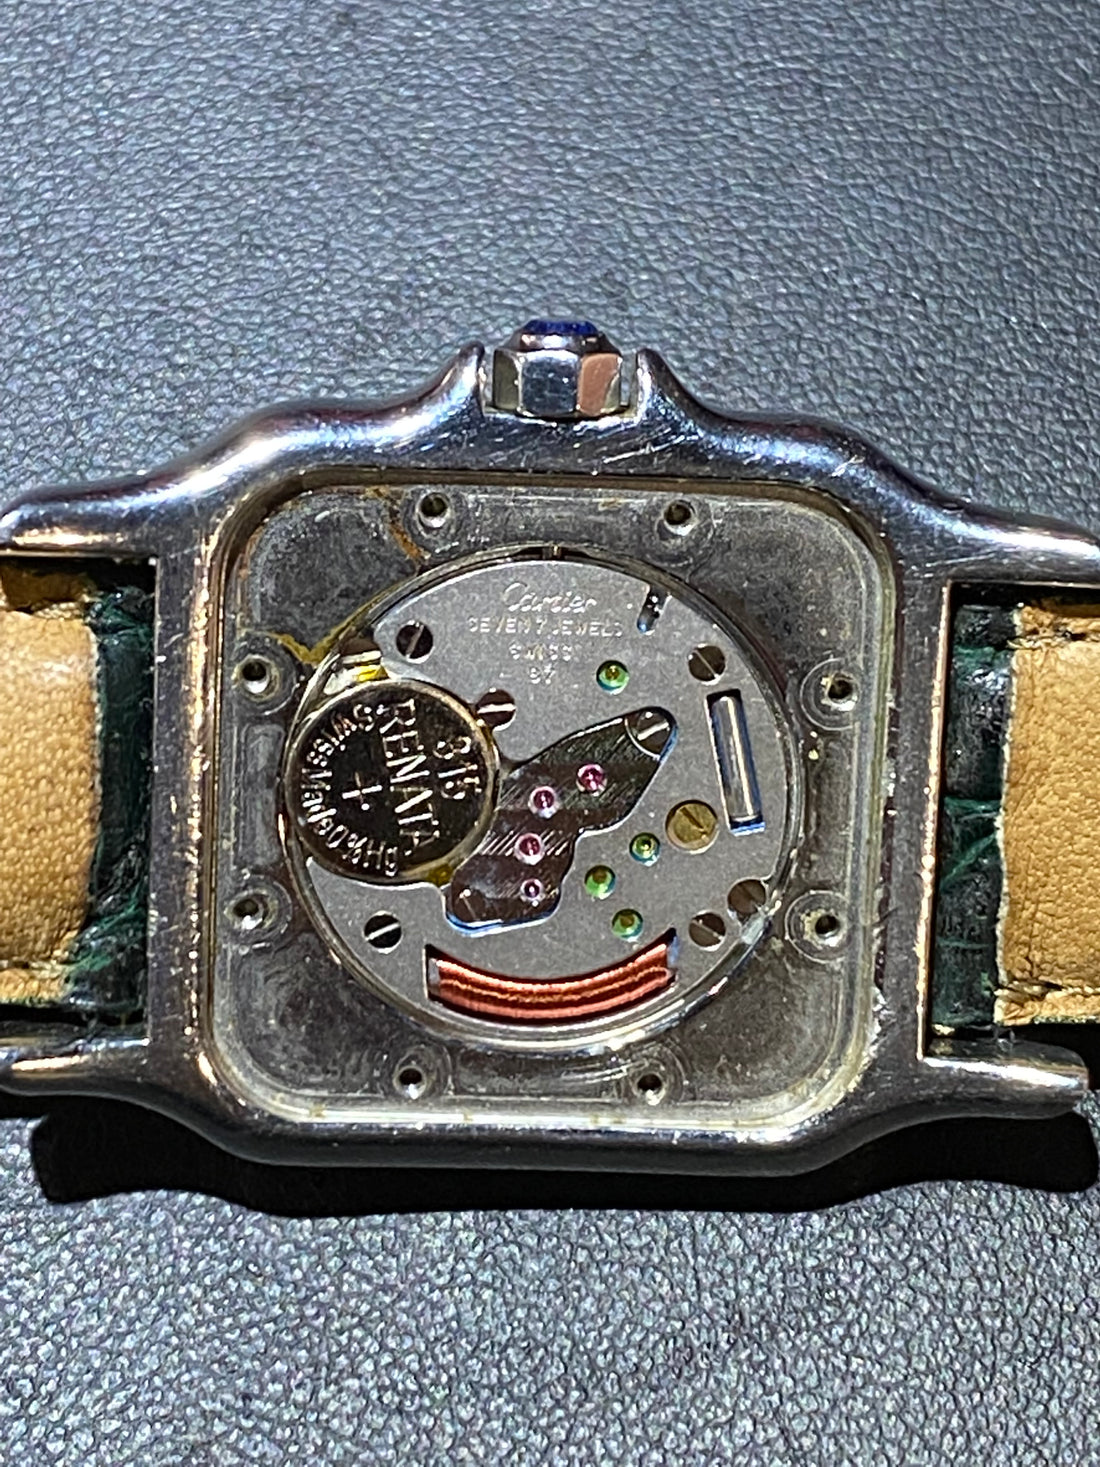 Cartier Santos Galbee Two-Tone 29mm 1566 Watch